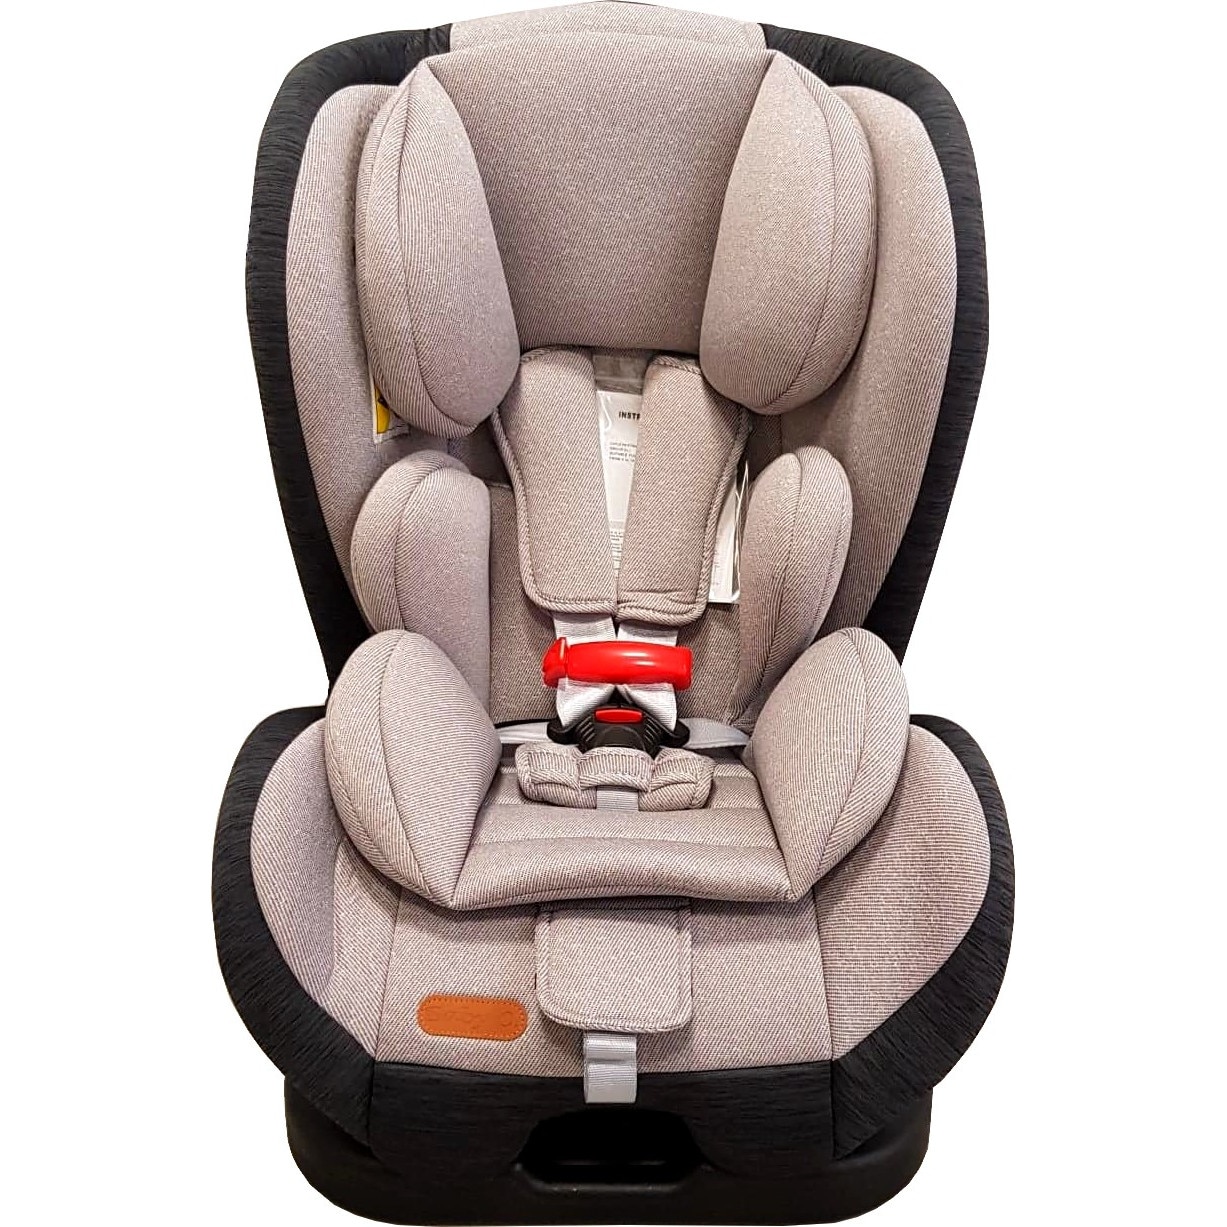 King Lear field sake Scaun Auto Baby Care™ Safety Seat, Transformabil in scoica auto, 0-18 kg,  Spatar reglabil in 4 trepte, Centura de siguranta cu prindere in 5 puncte,  Husa detasabila, Gri cu Negru - eMAG.ro